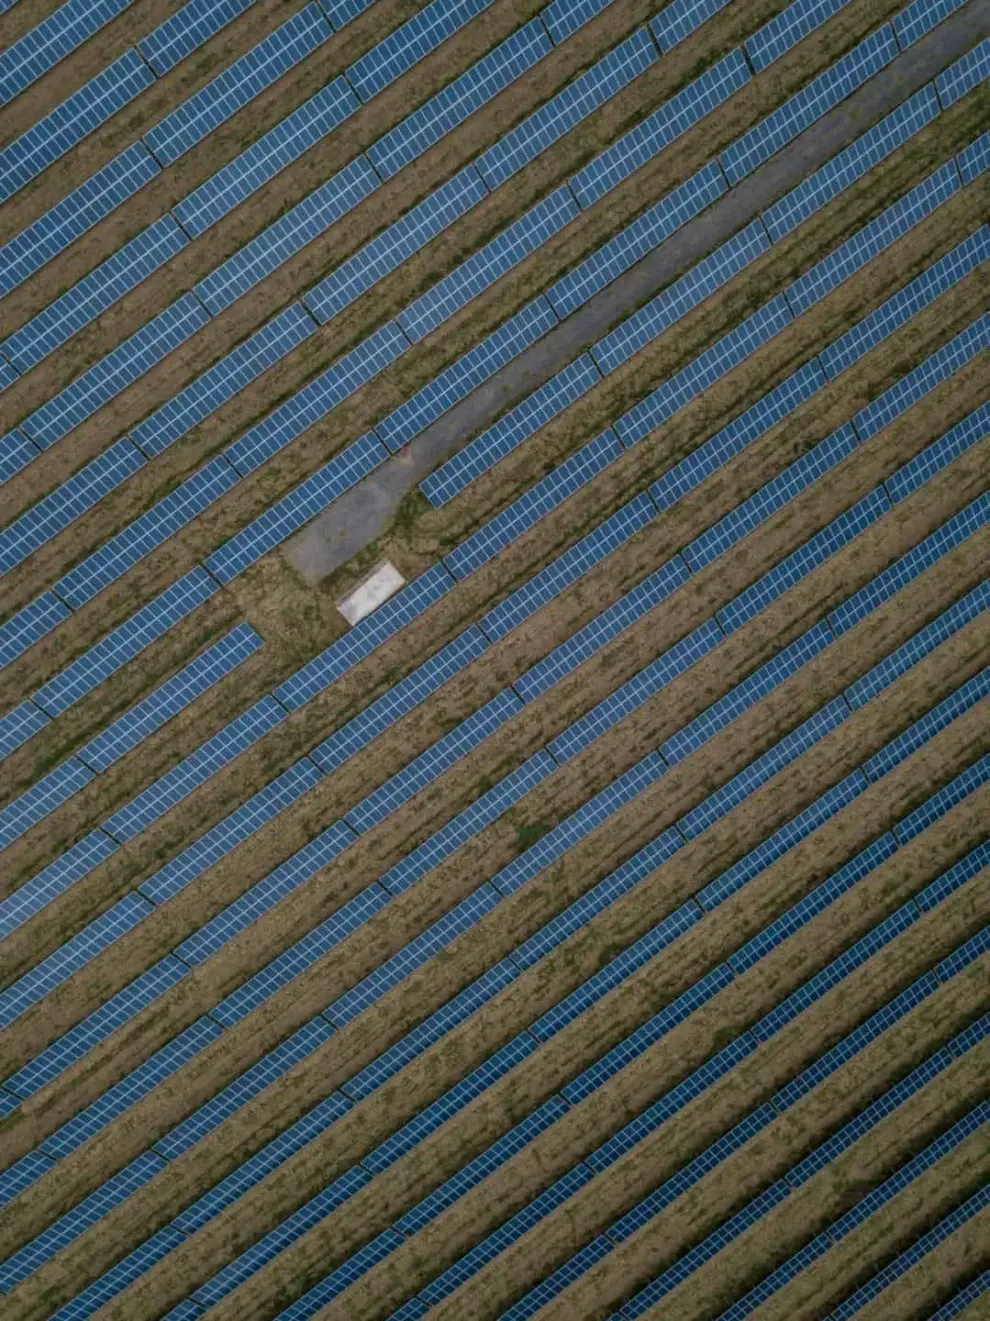 NextEra Energy Solar Building 2,000 Acre Solar Farm to Power 30,000 Homes